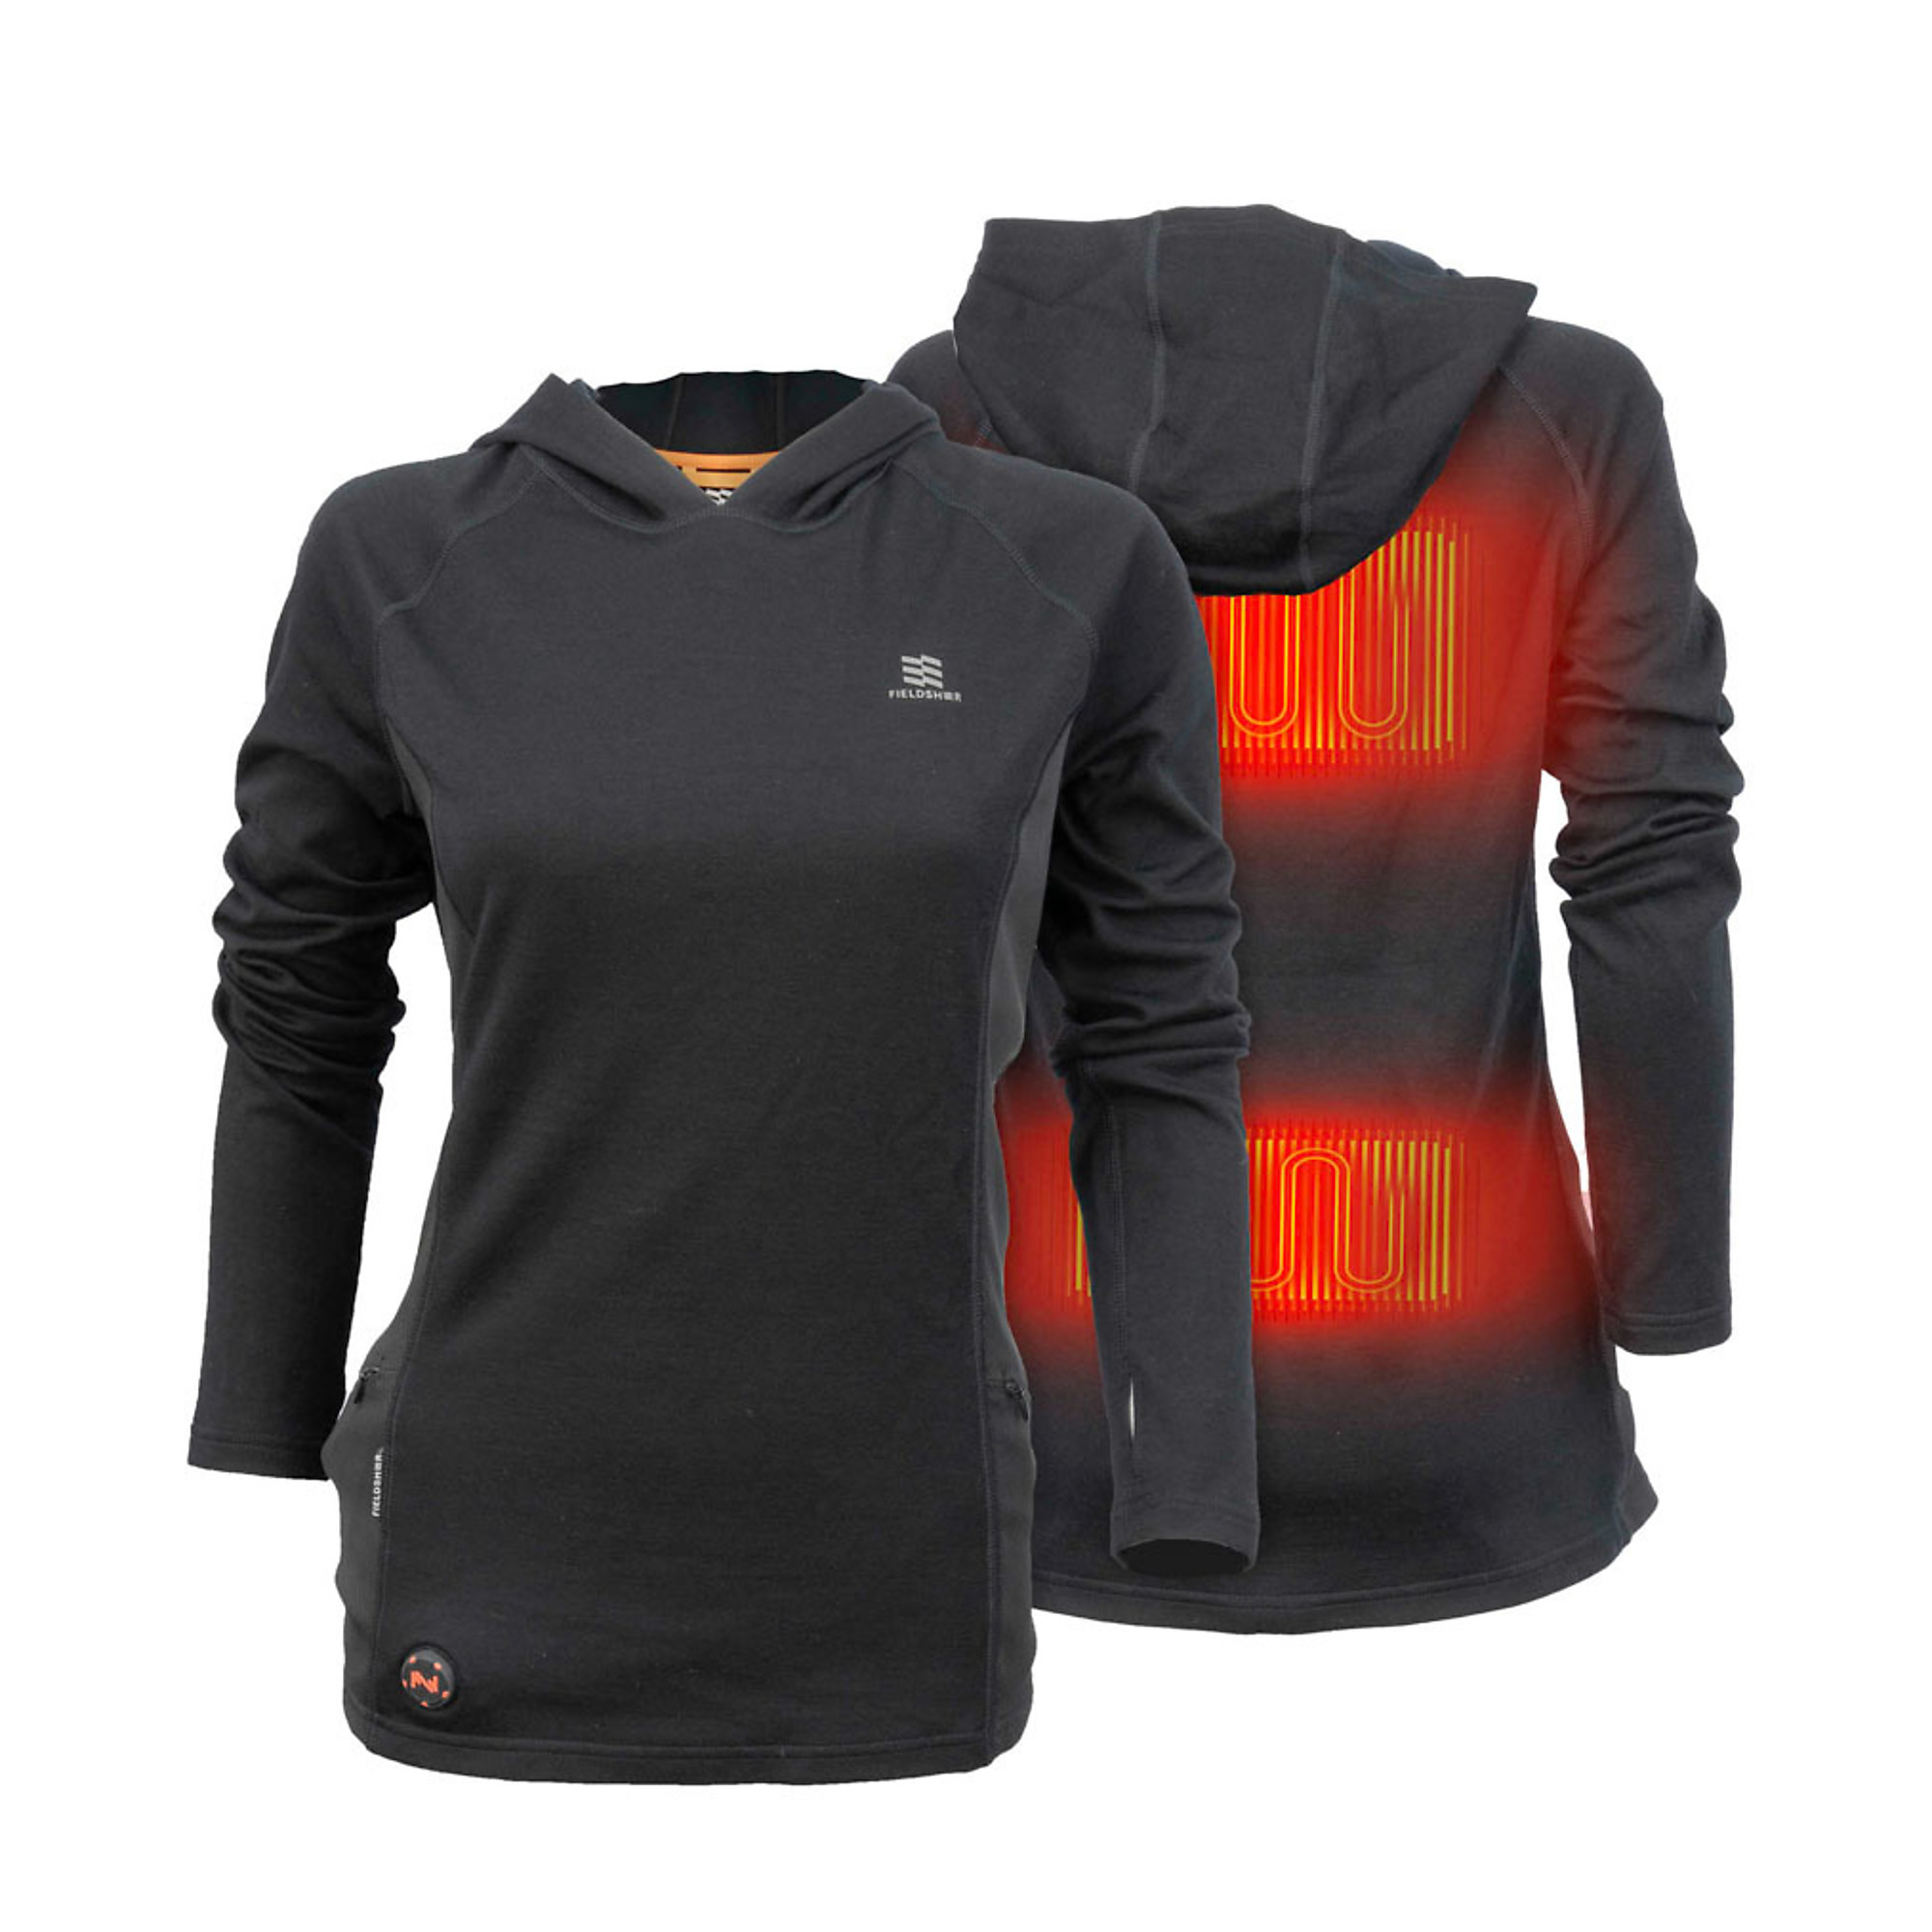 Fieldsheer, Women's Merino Heated Baselayer Shirt, Size XL, Color Black, Model MWWT14010521